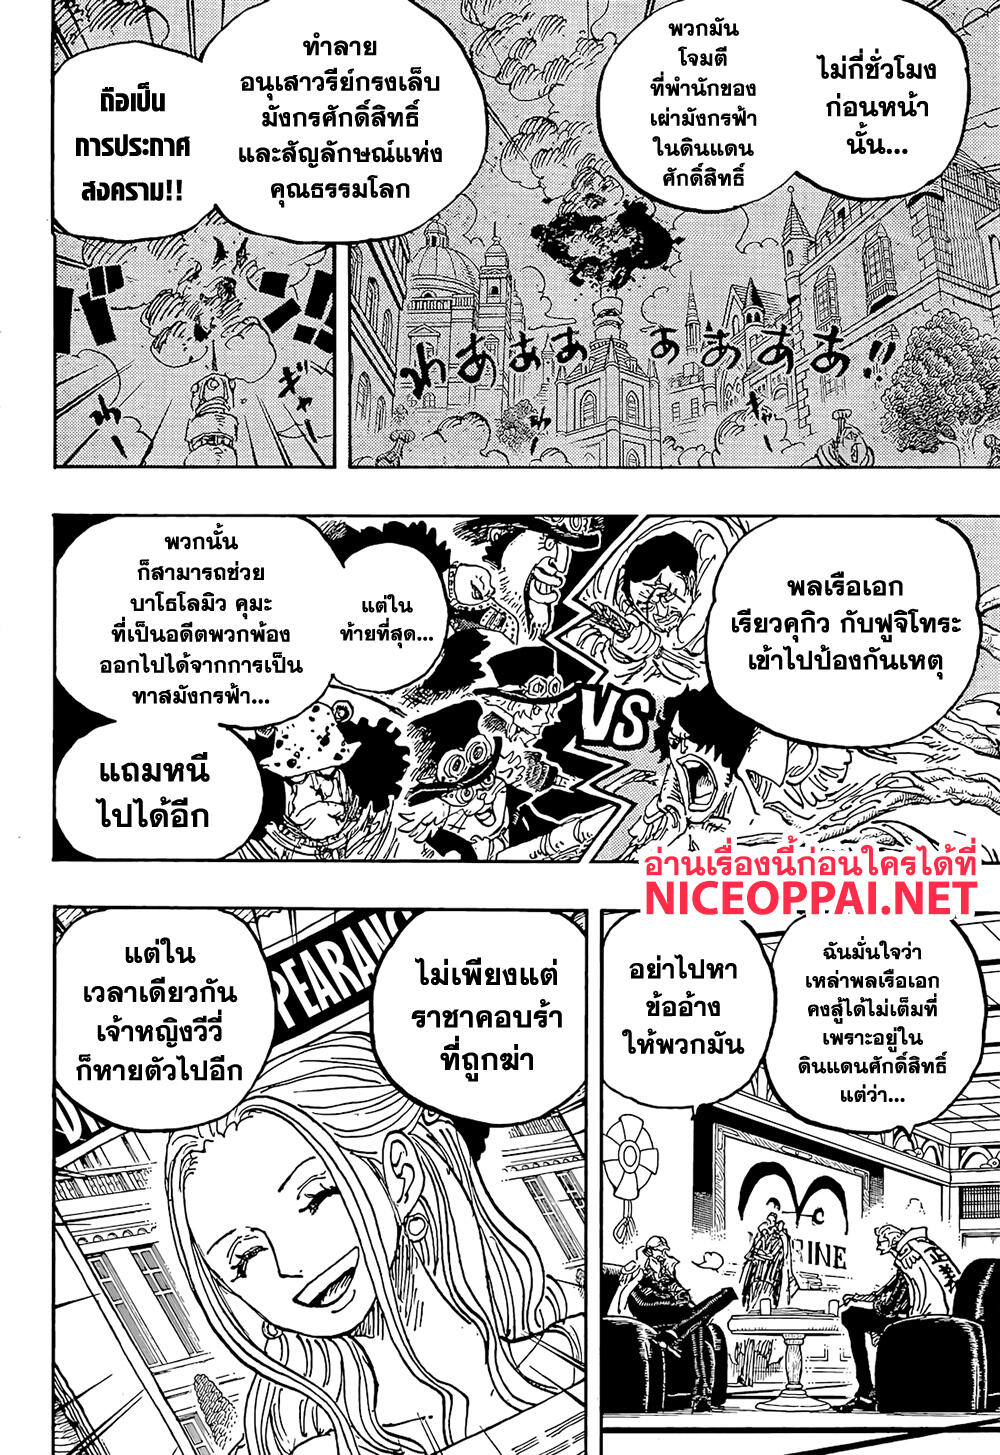 One Piece 1054-จักรพรรดิเพลิง